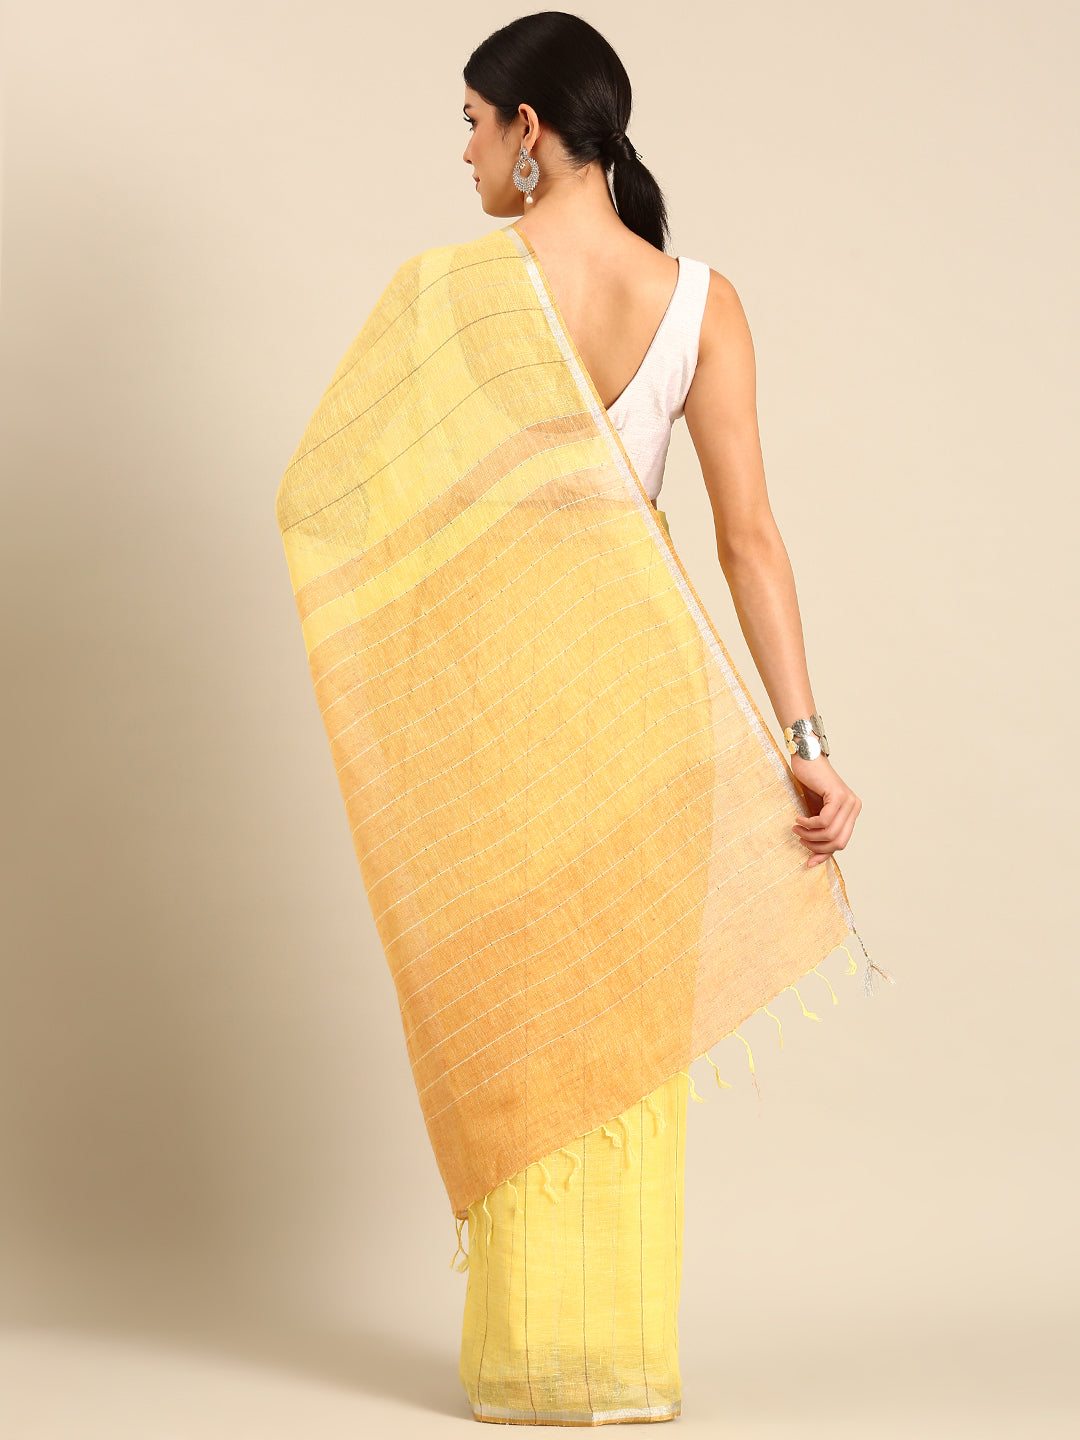 Designer Yellow Cotton Saree